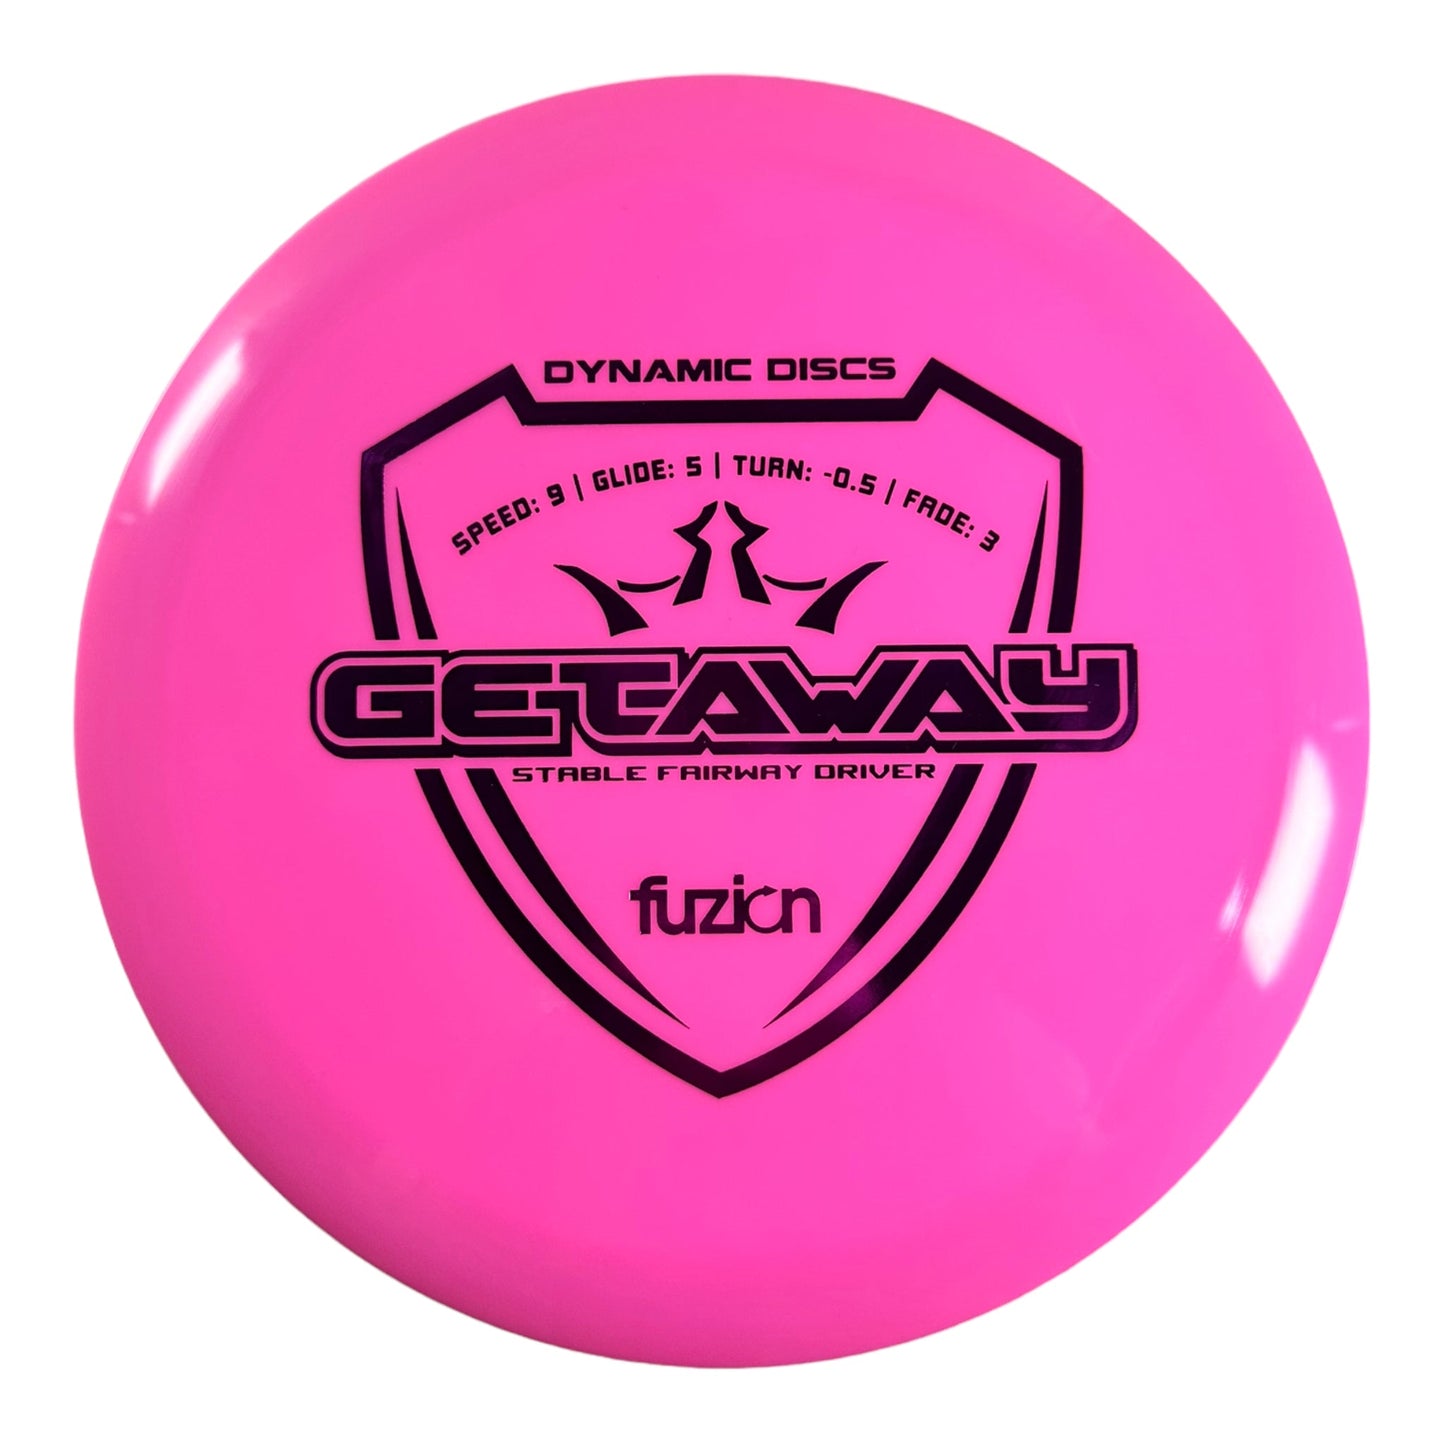 Dynamic Discs Getaway | Fuzion | Pink/Pink 173g Disc Golf